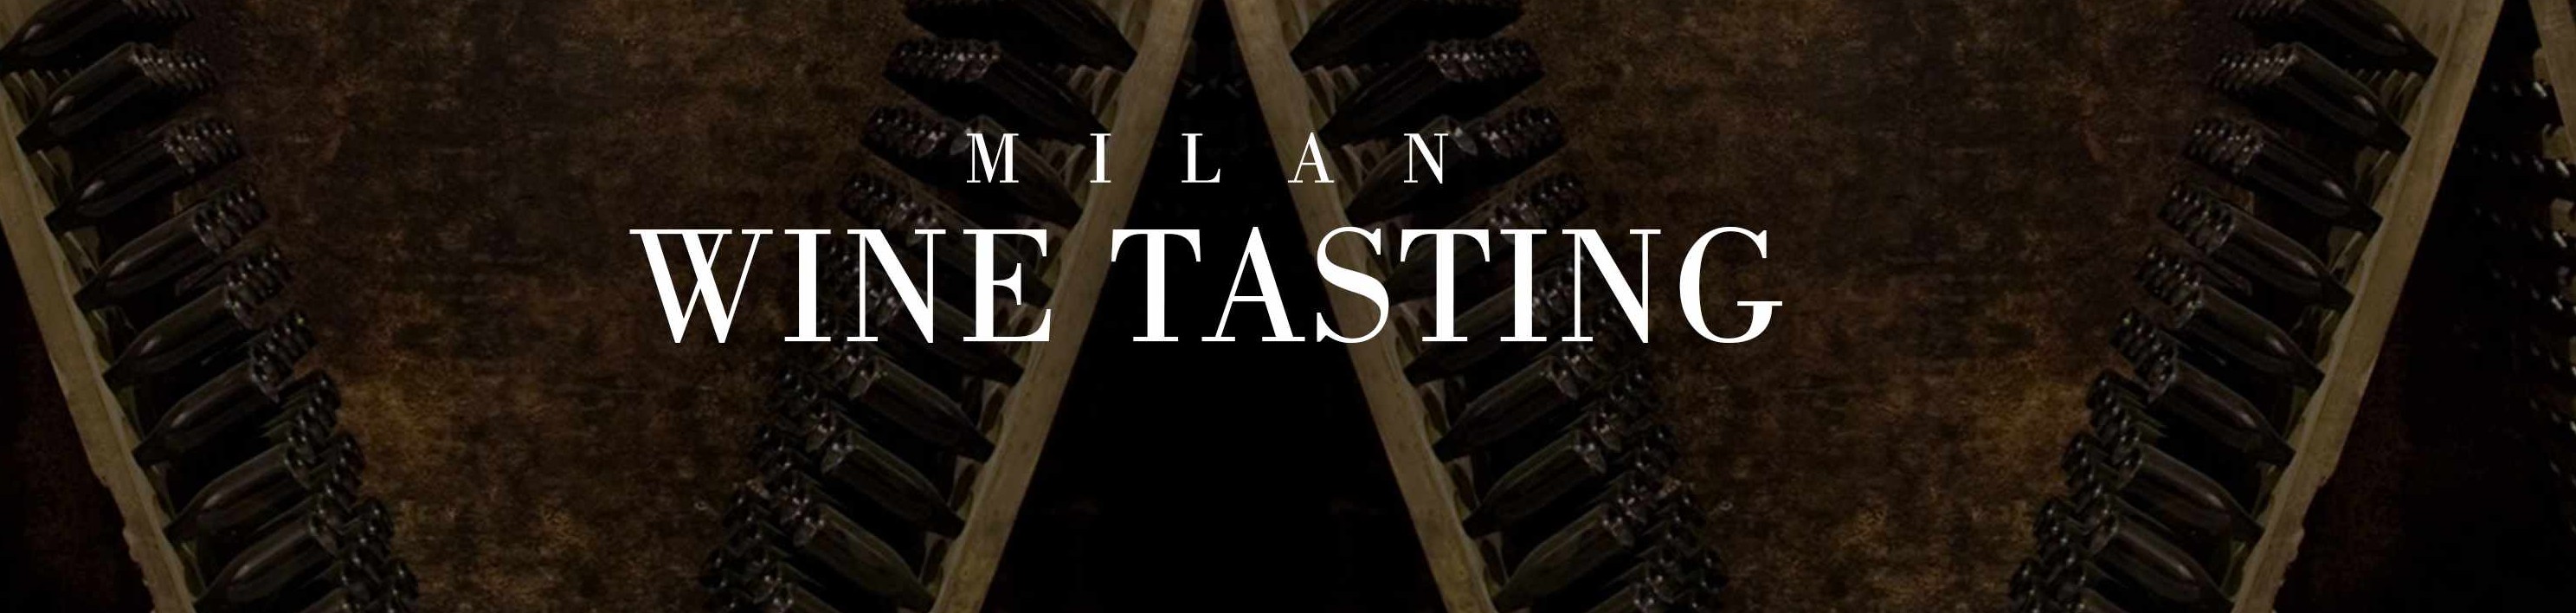 MILAN WINE TASTING